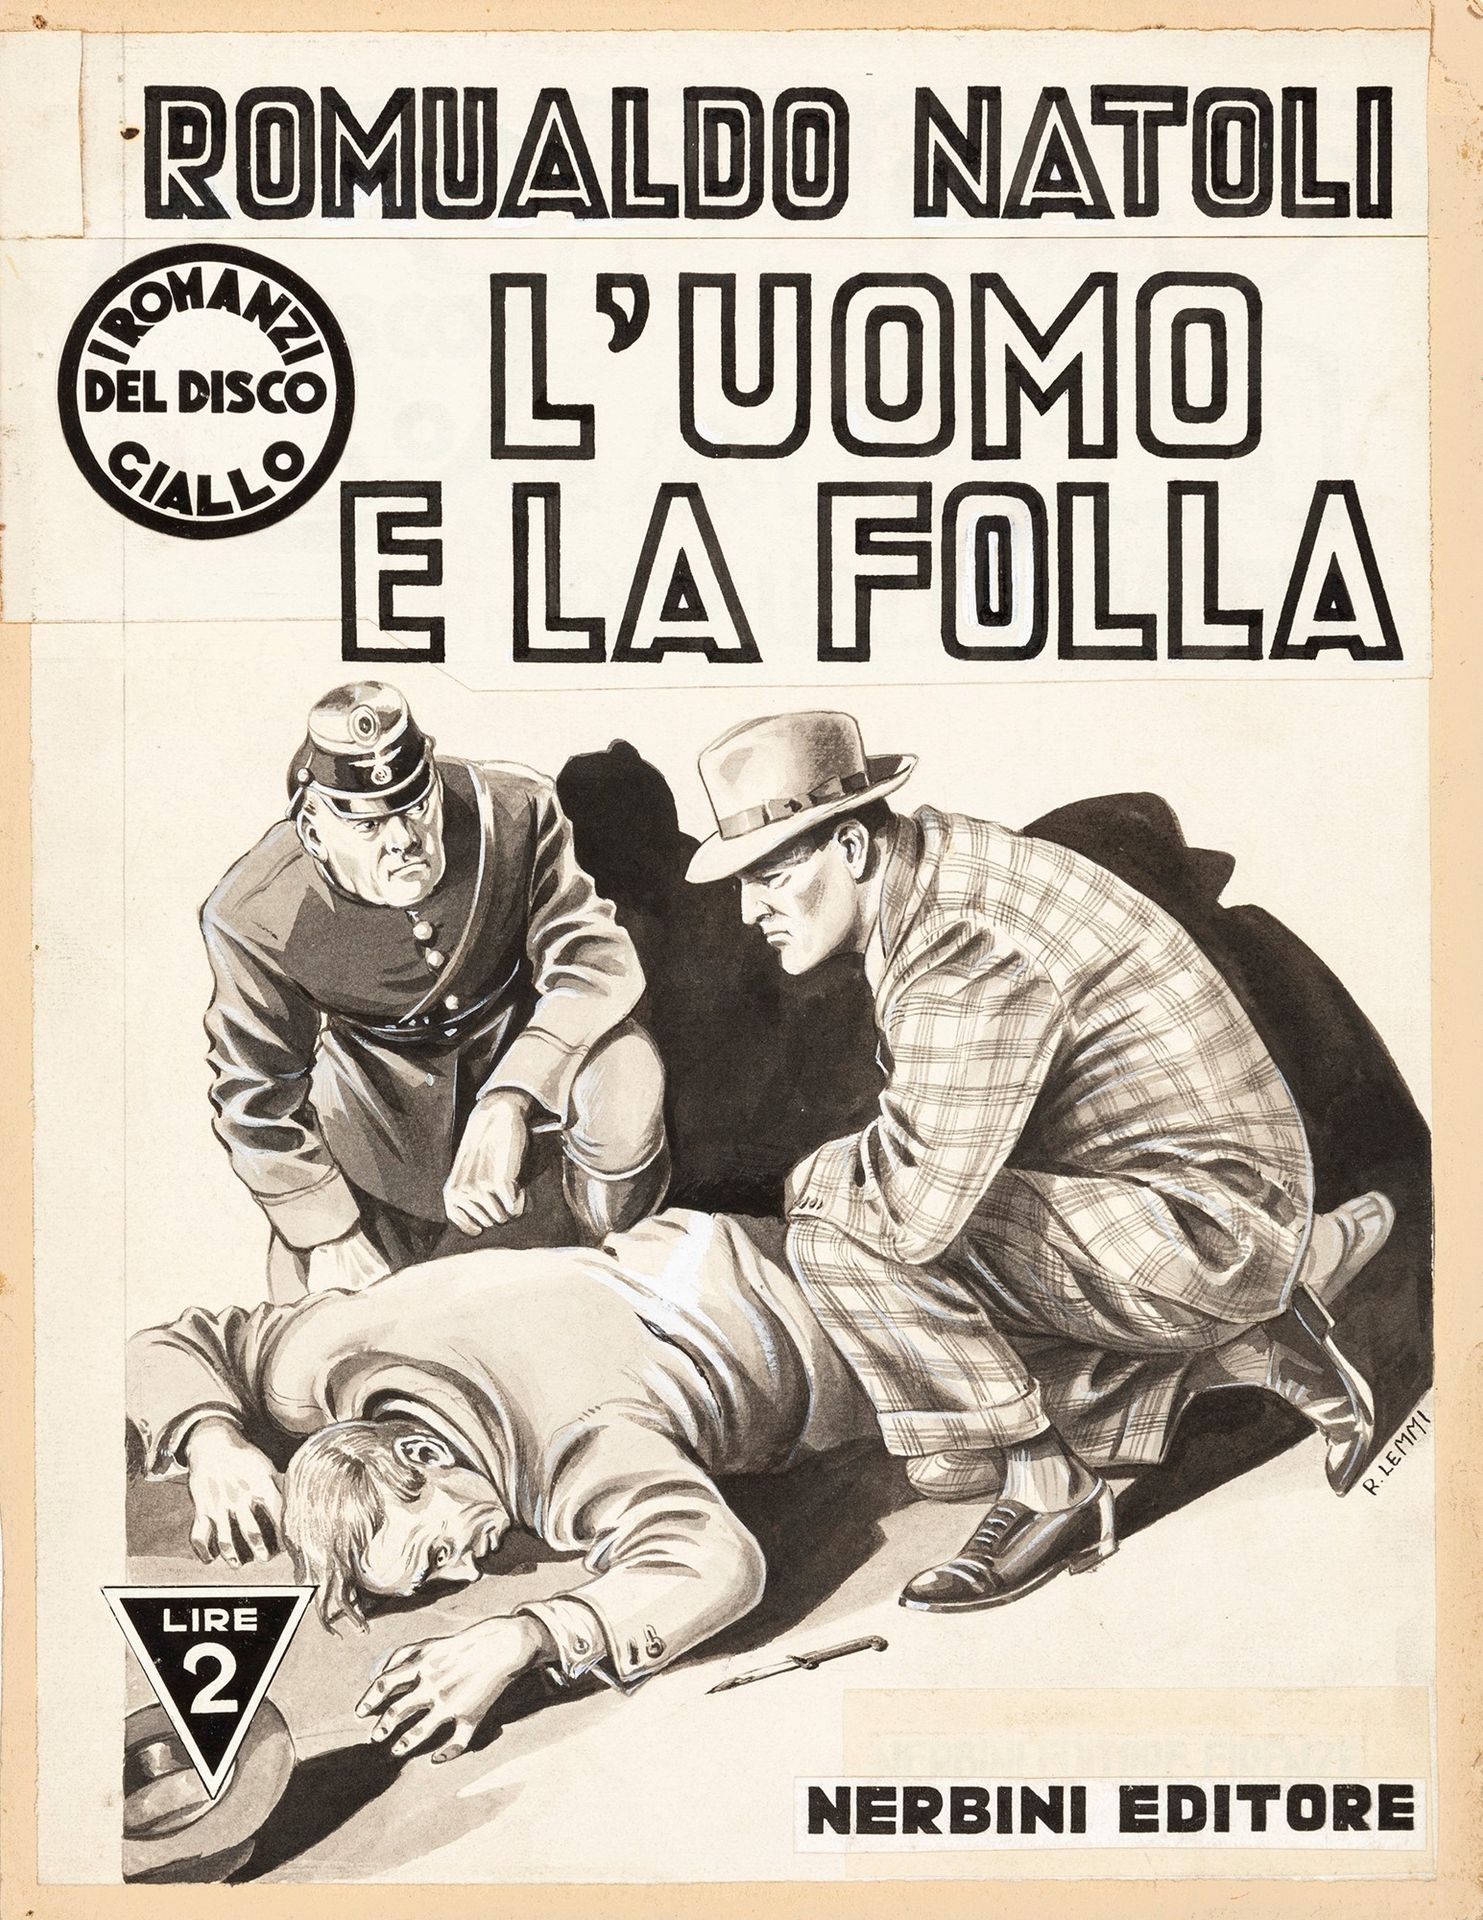 Roberto Lemmi L'uomo e la folla, 1941

Bleistift, Tusche und Aquarell auf dünnem&hellip;